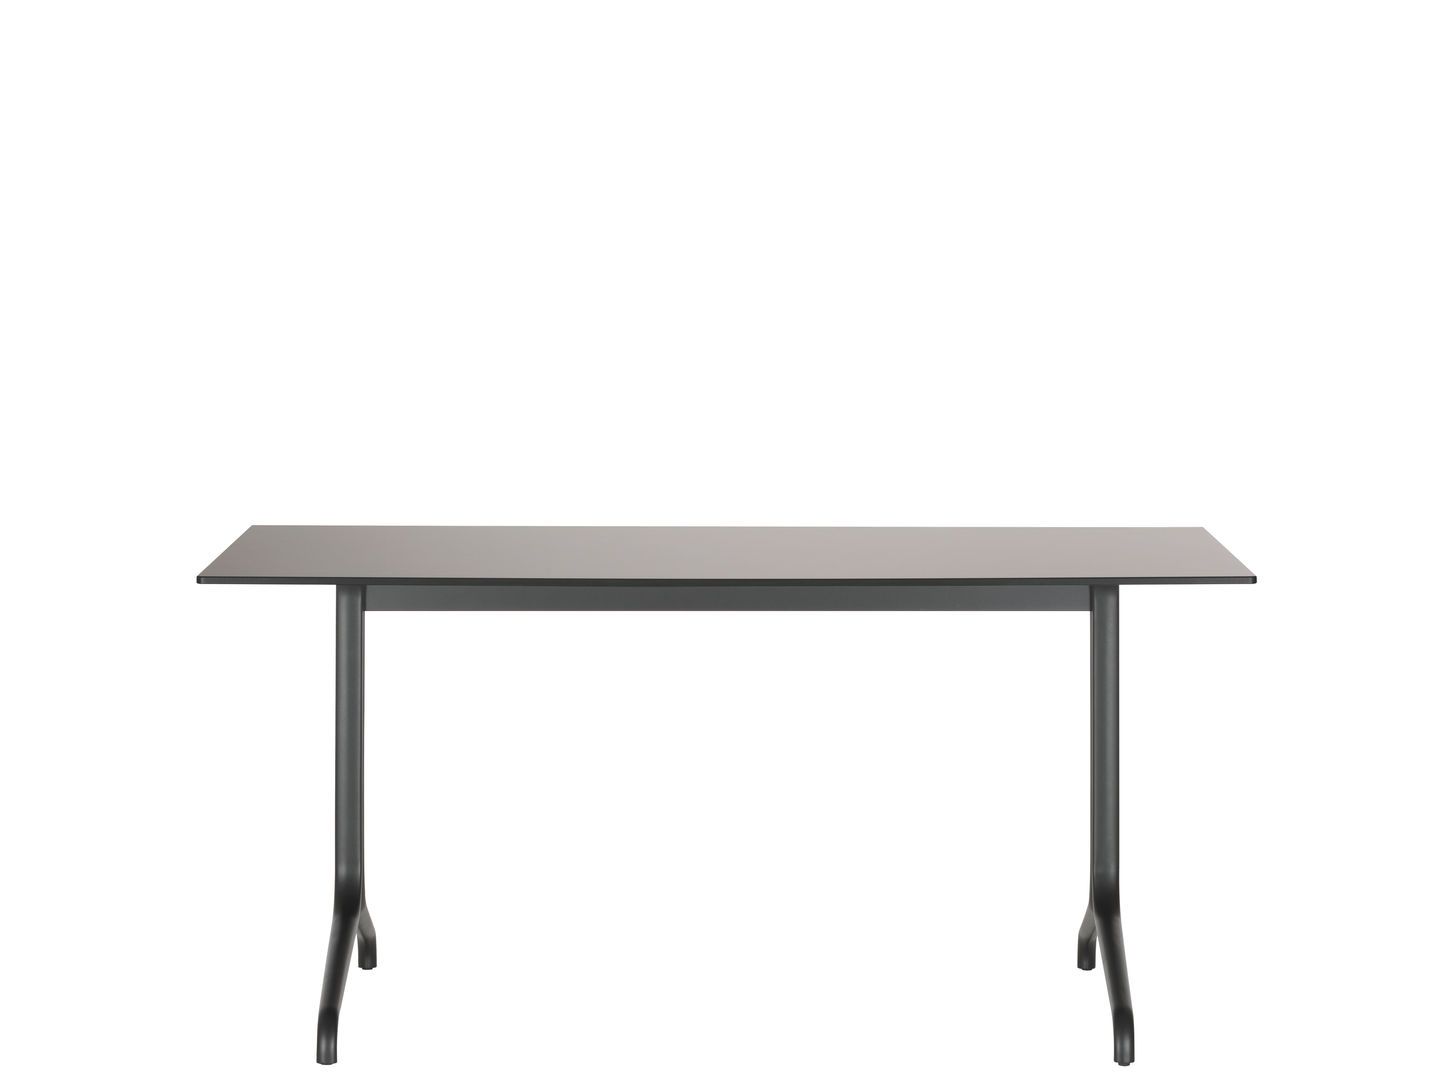 Belleville Table (rectangular) | One52 Furniture 